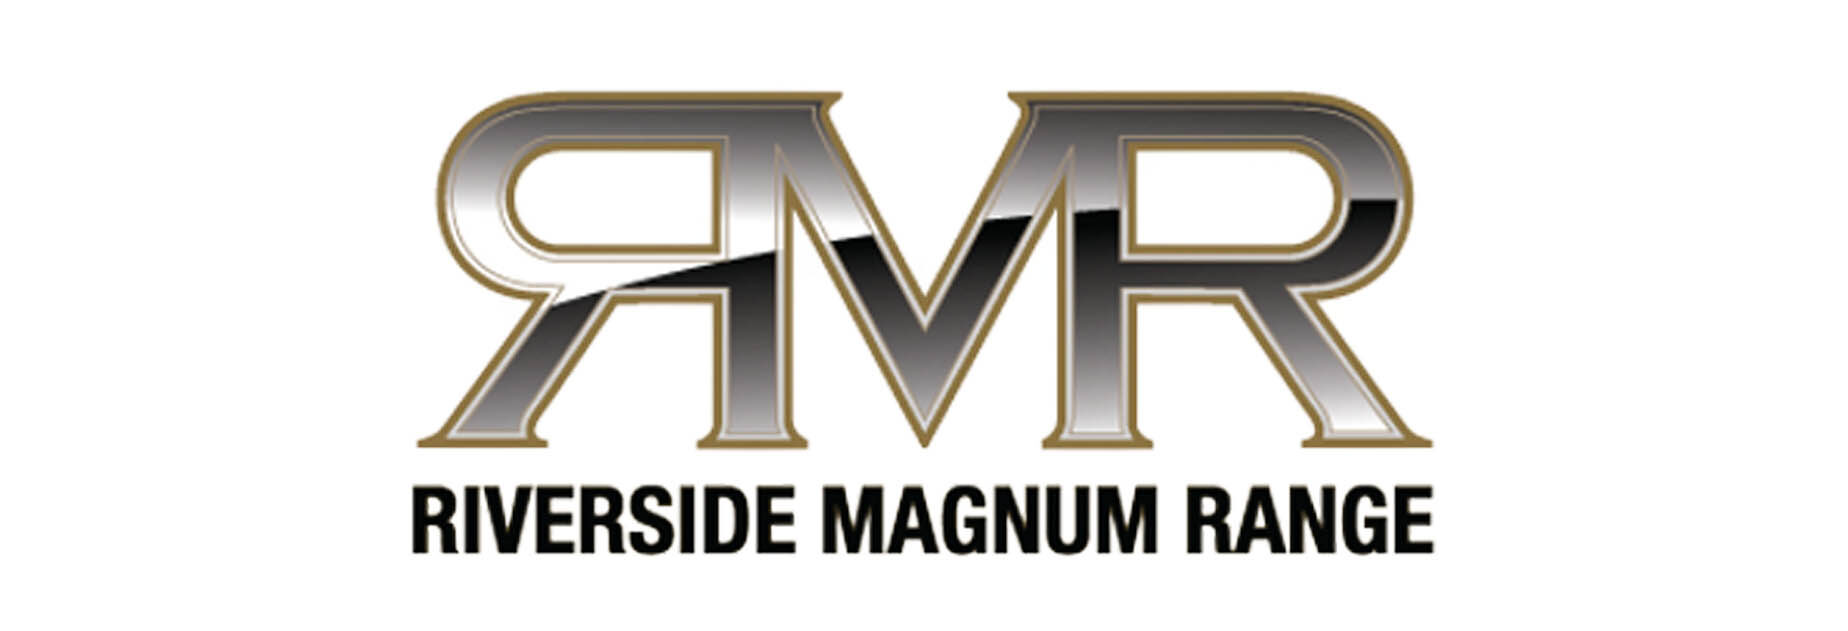 Riverside magnum